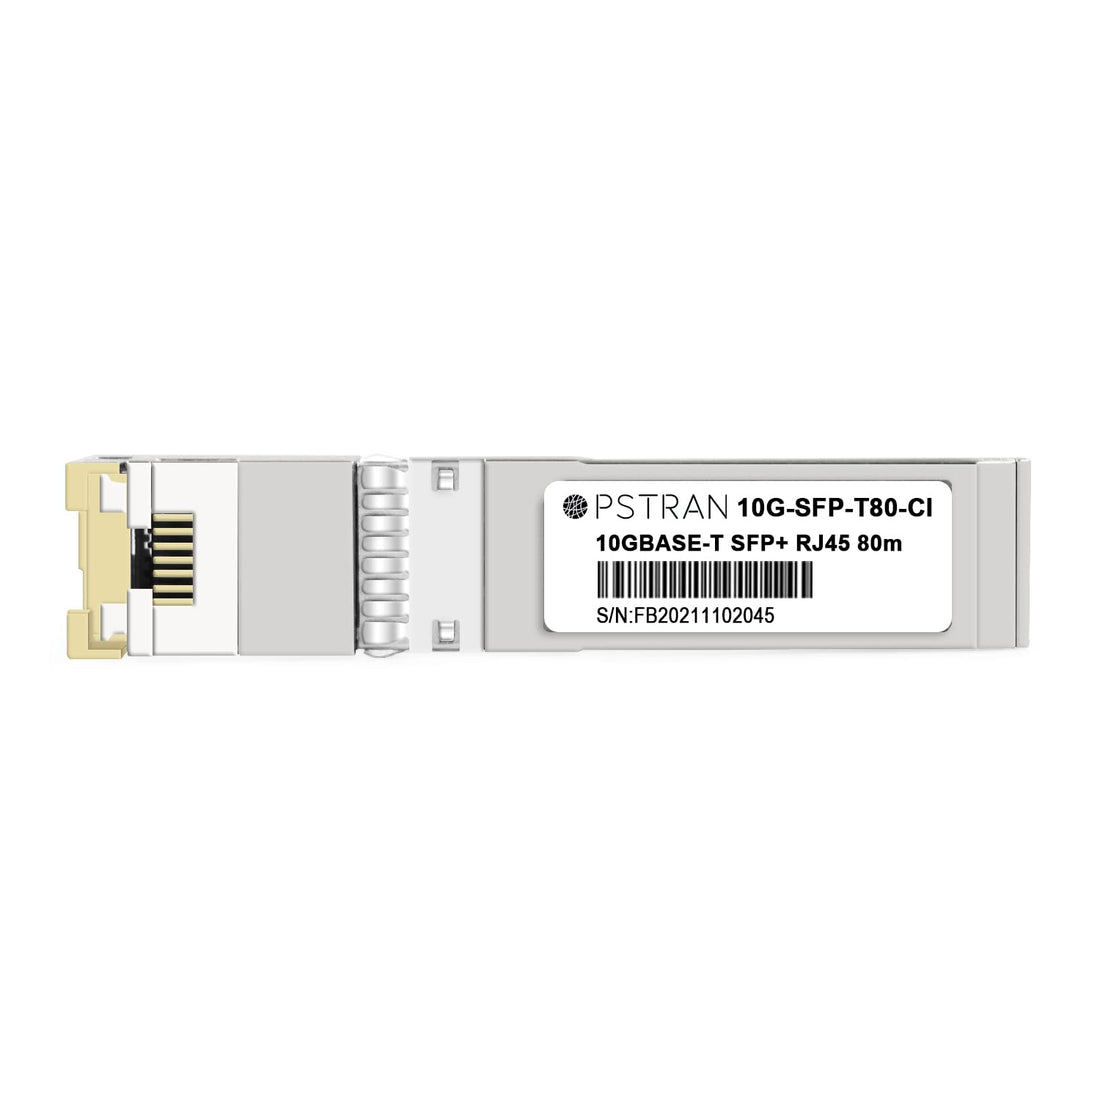 OPSTRAN 10GBASE-T SFP+ to RJ45 Copper Transceiver Module Compatible for Cisco SFP-10G-T-80 Finisar Netgear AXM766 TP-Link D-Link QNAP Supermicro 10G SFP+ 80m Cat6a/7